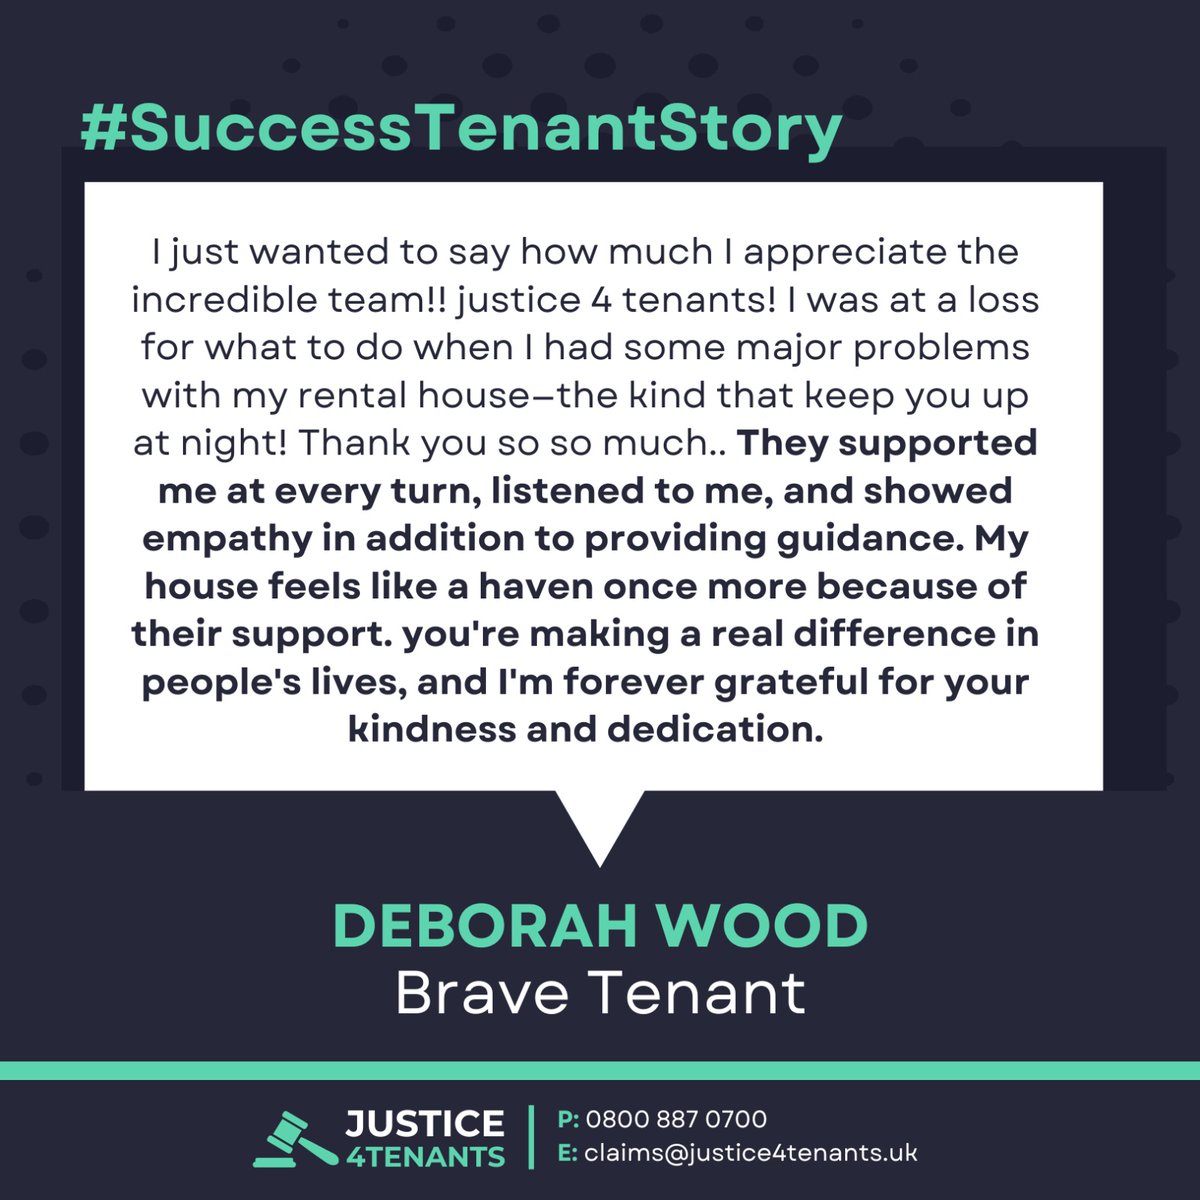 Thank you, Mrs. Deborah, for your kind words! We're glad we could help. Your satisfaction means the world to us! 

#HousingDisrepair #Just4Tenants #UKHousing #UKRenting #RentingInUK #TenantUK #HousingUK #UKProperty #TenantRightsUK #UKTenants #UKRenters #UKRentalMarket #Feedback